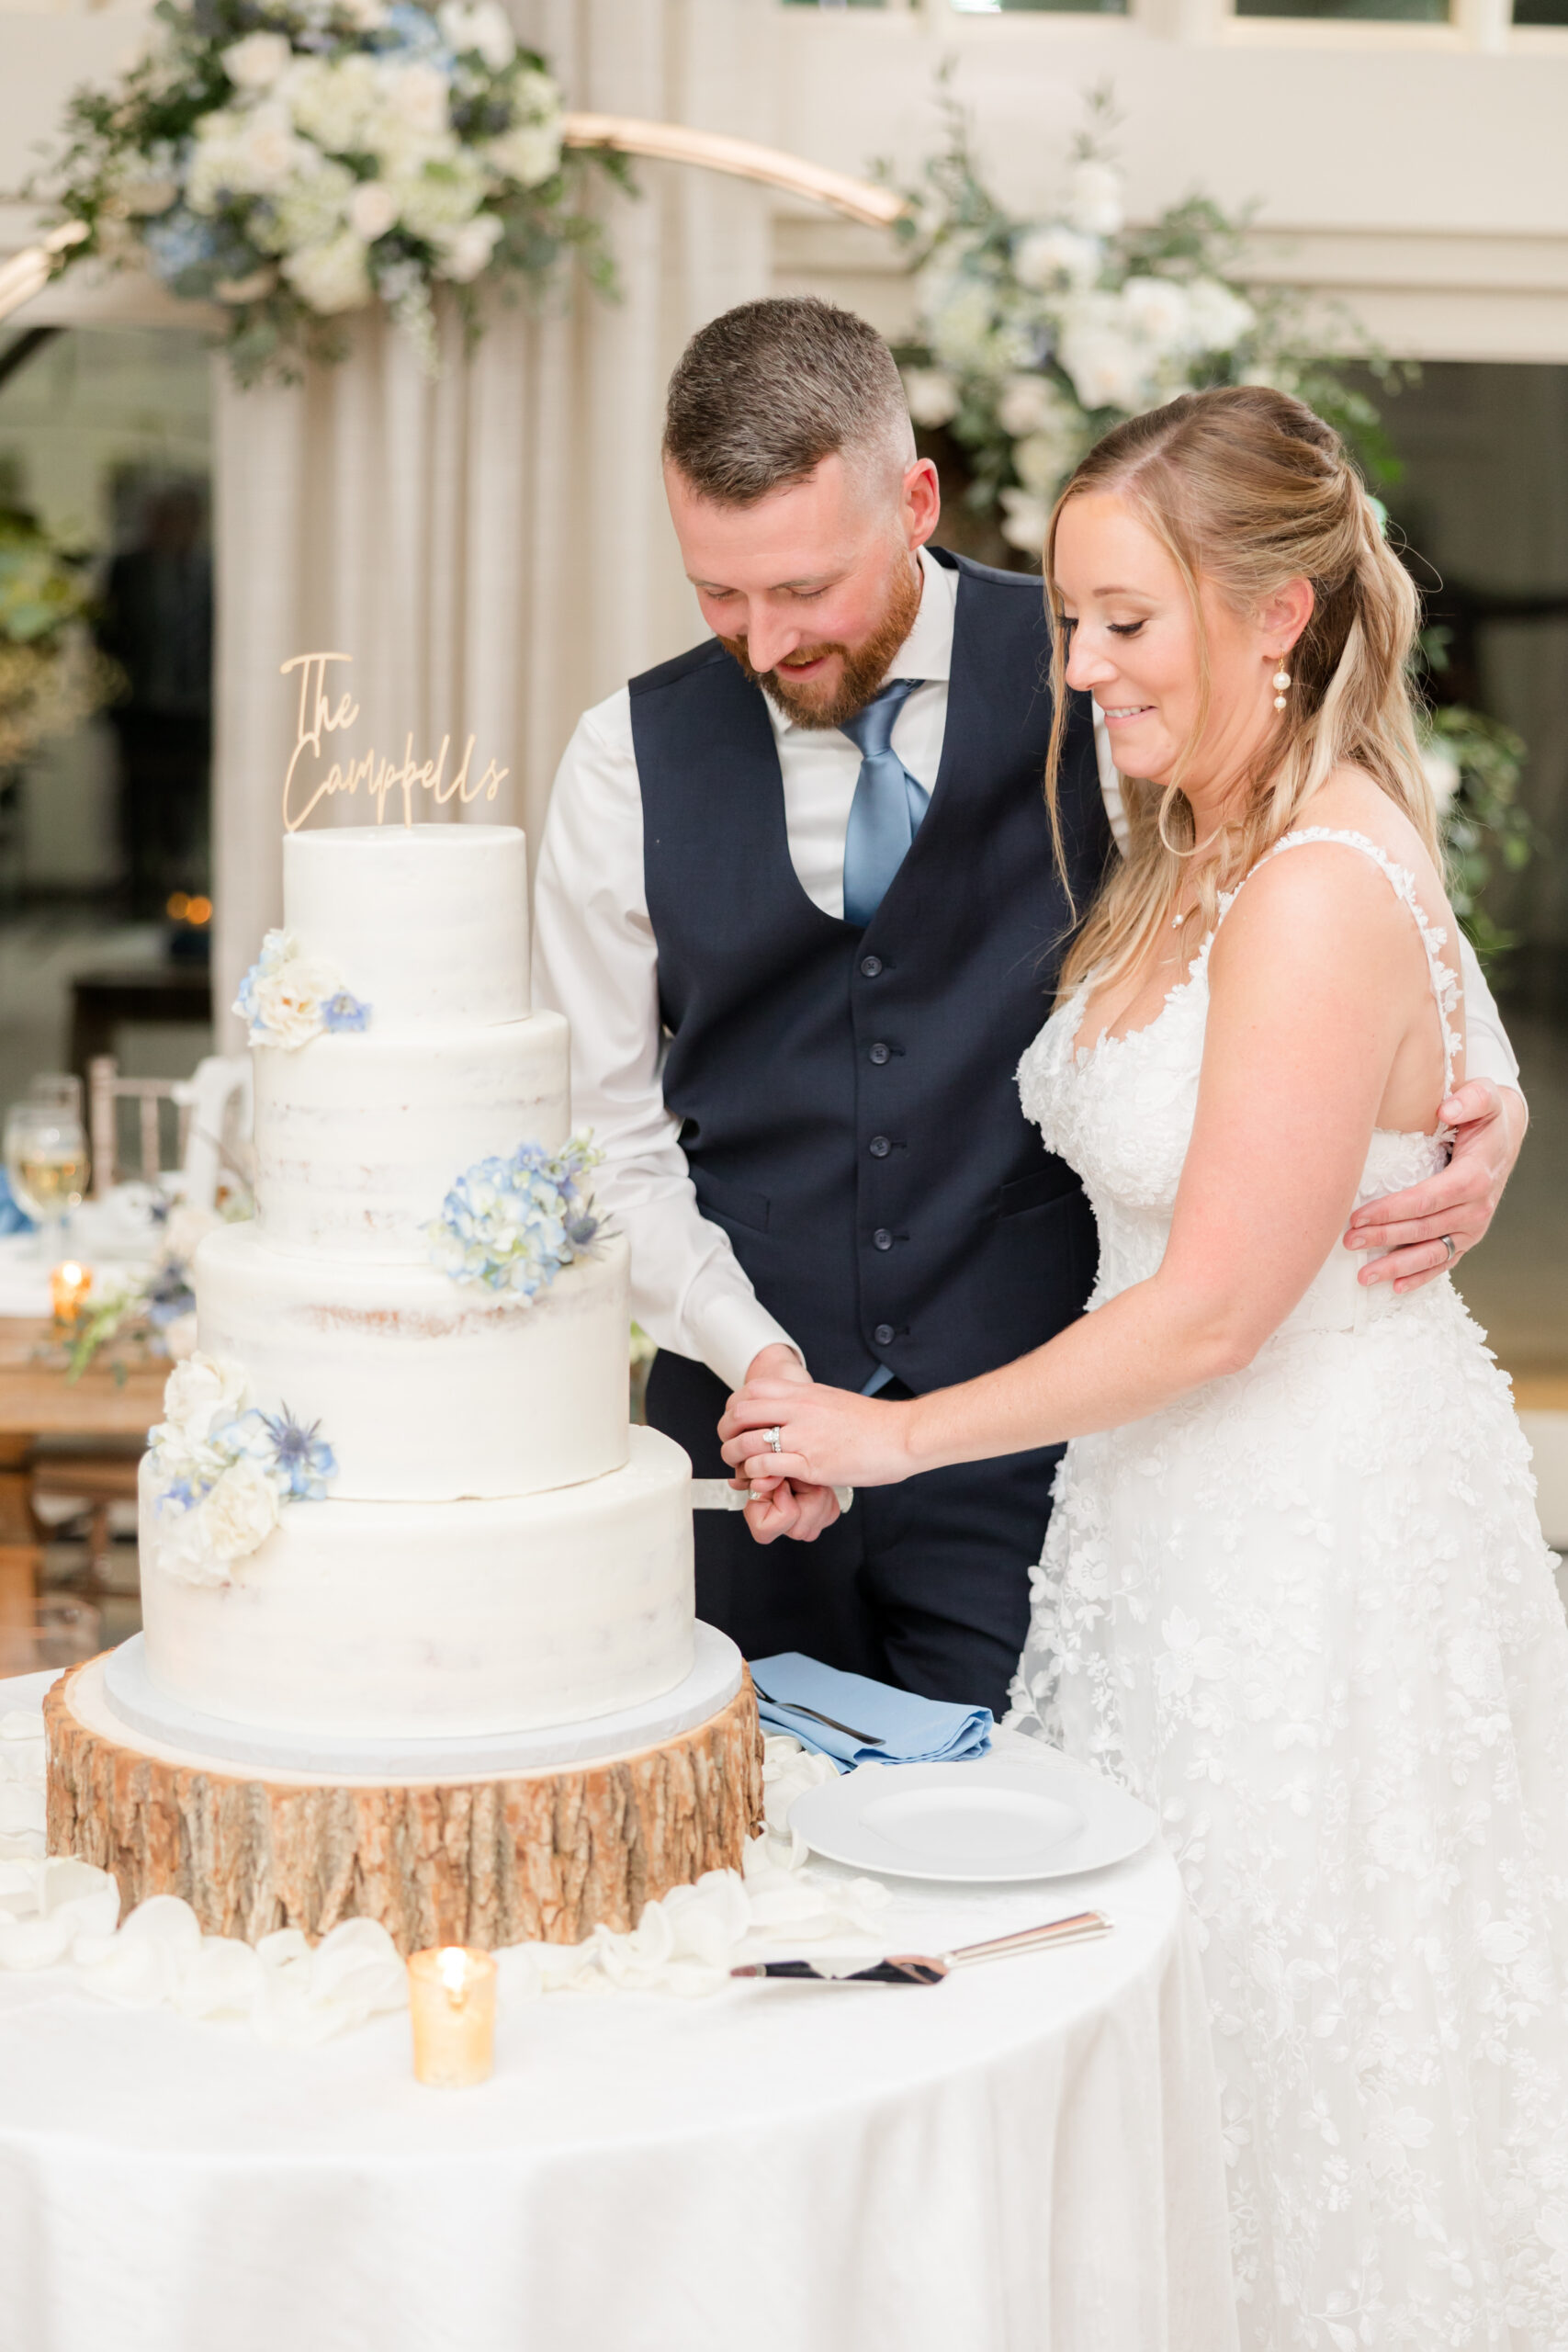 husband and wife cutting their wedding cake 